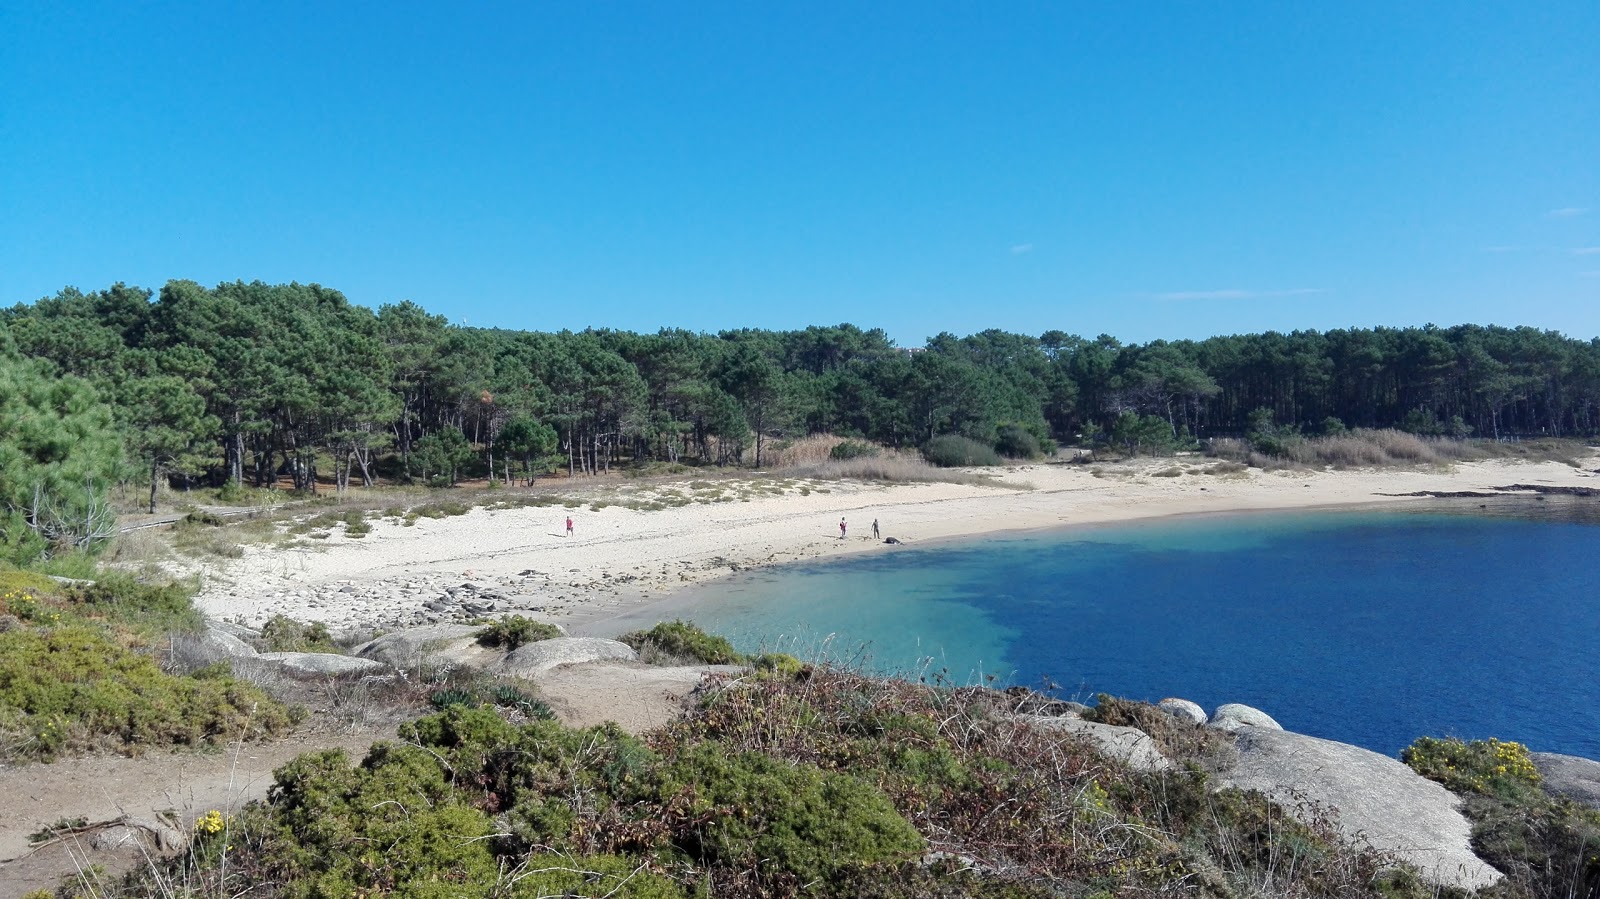 Foto av Canelas beach beläget i naturområde